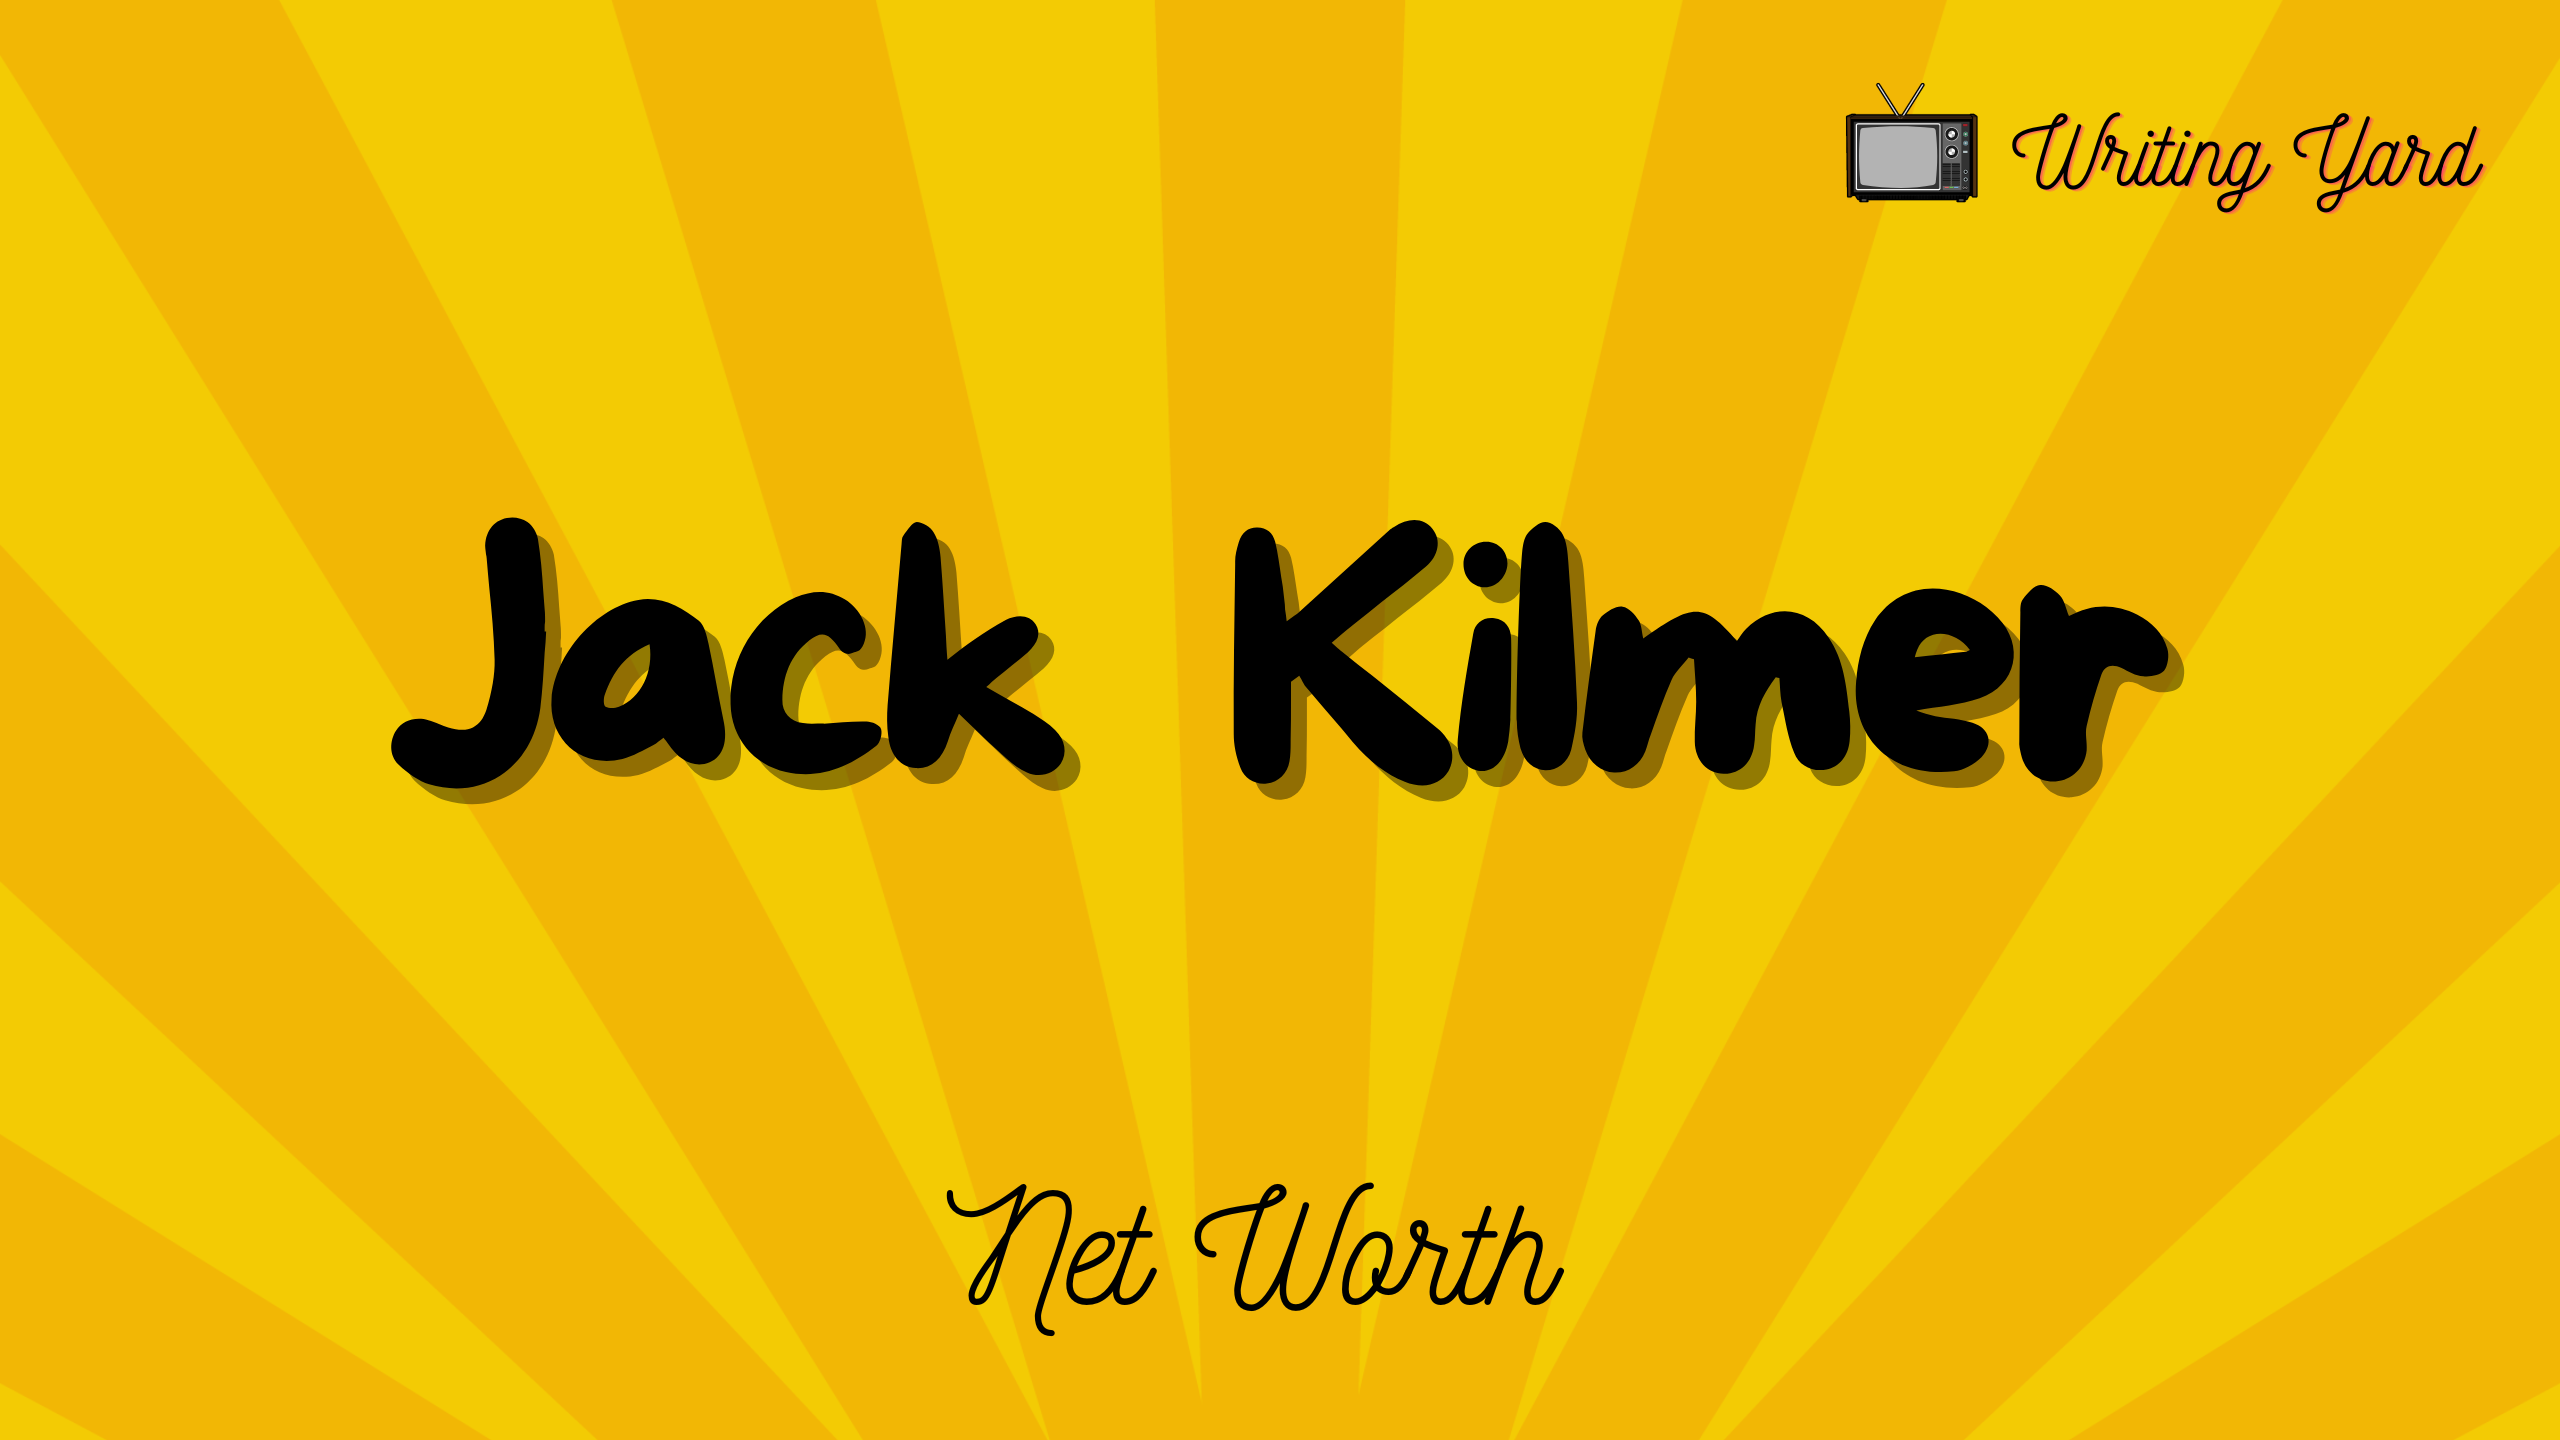 Jack Kilmer net worth